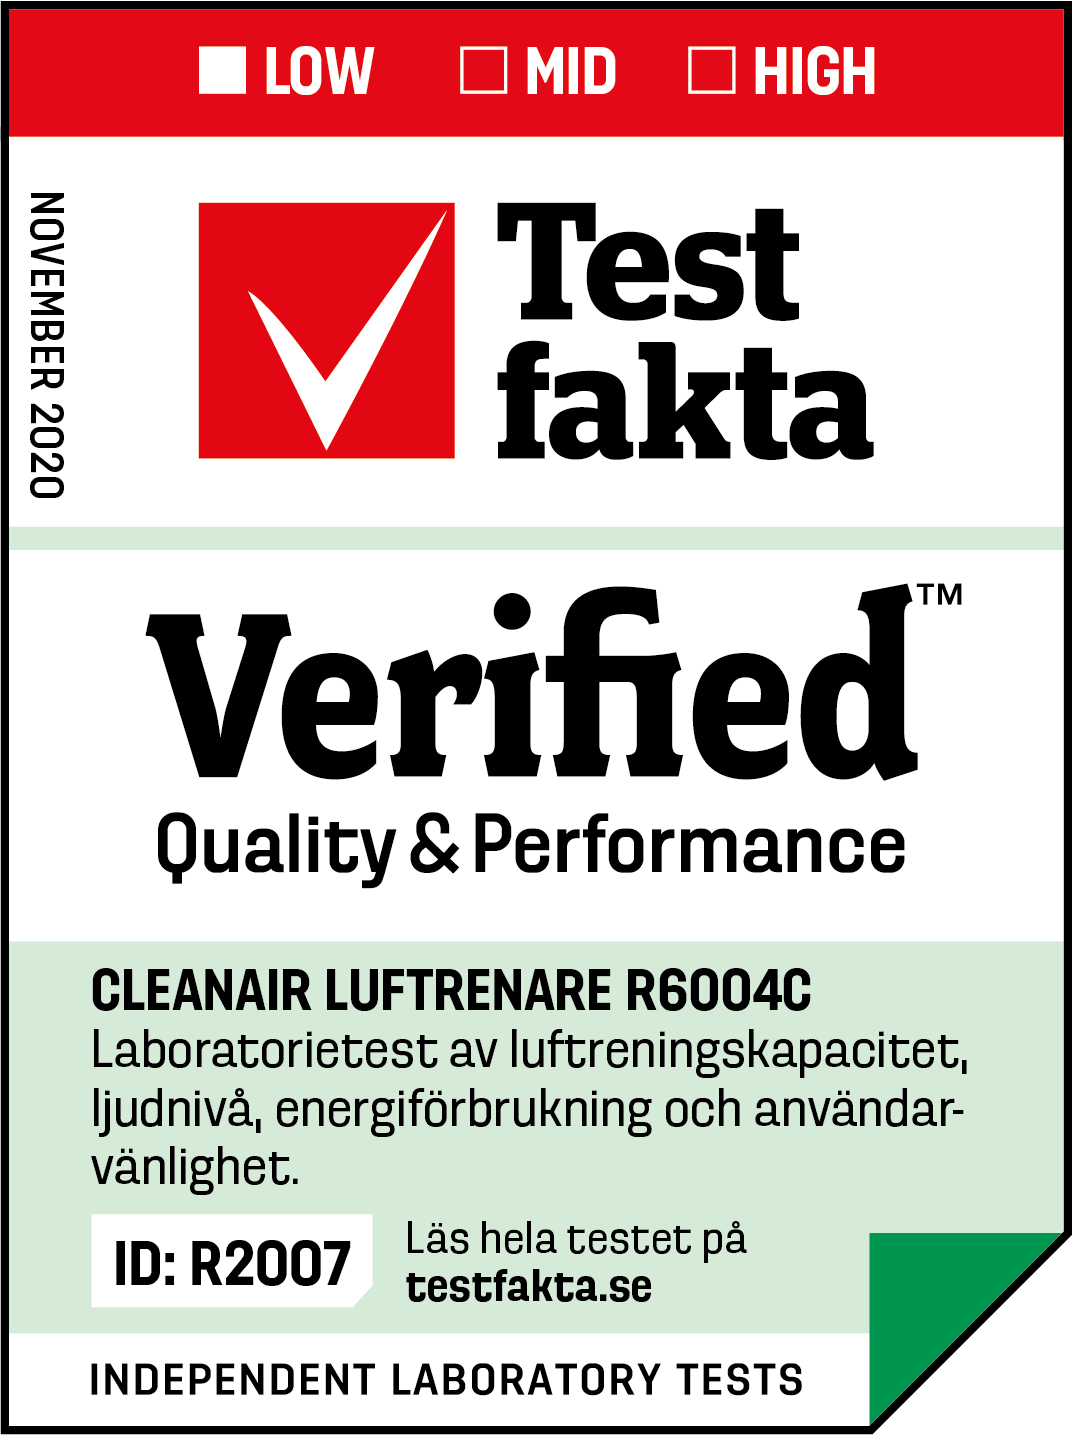 Verified Quality & Performance